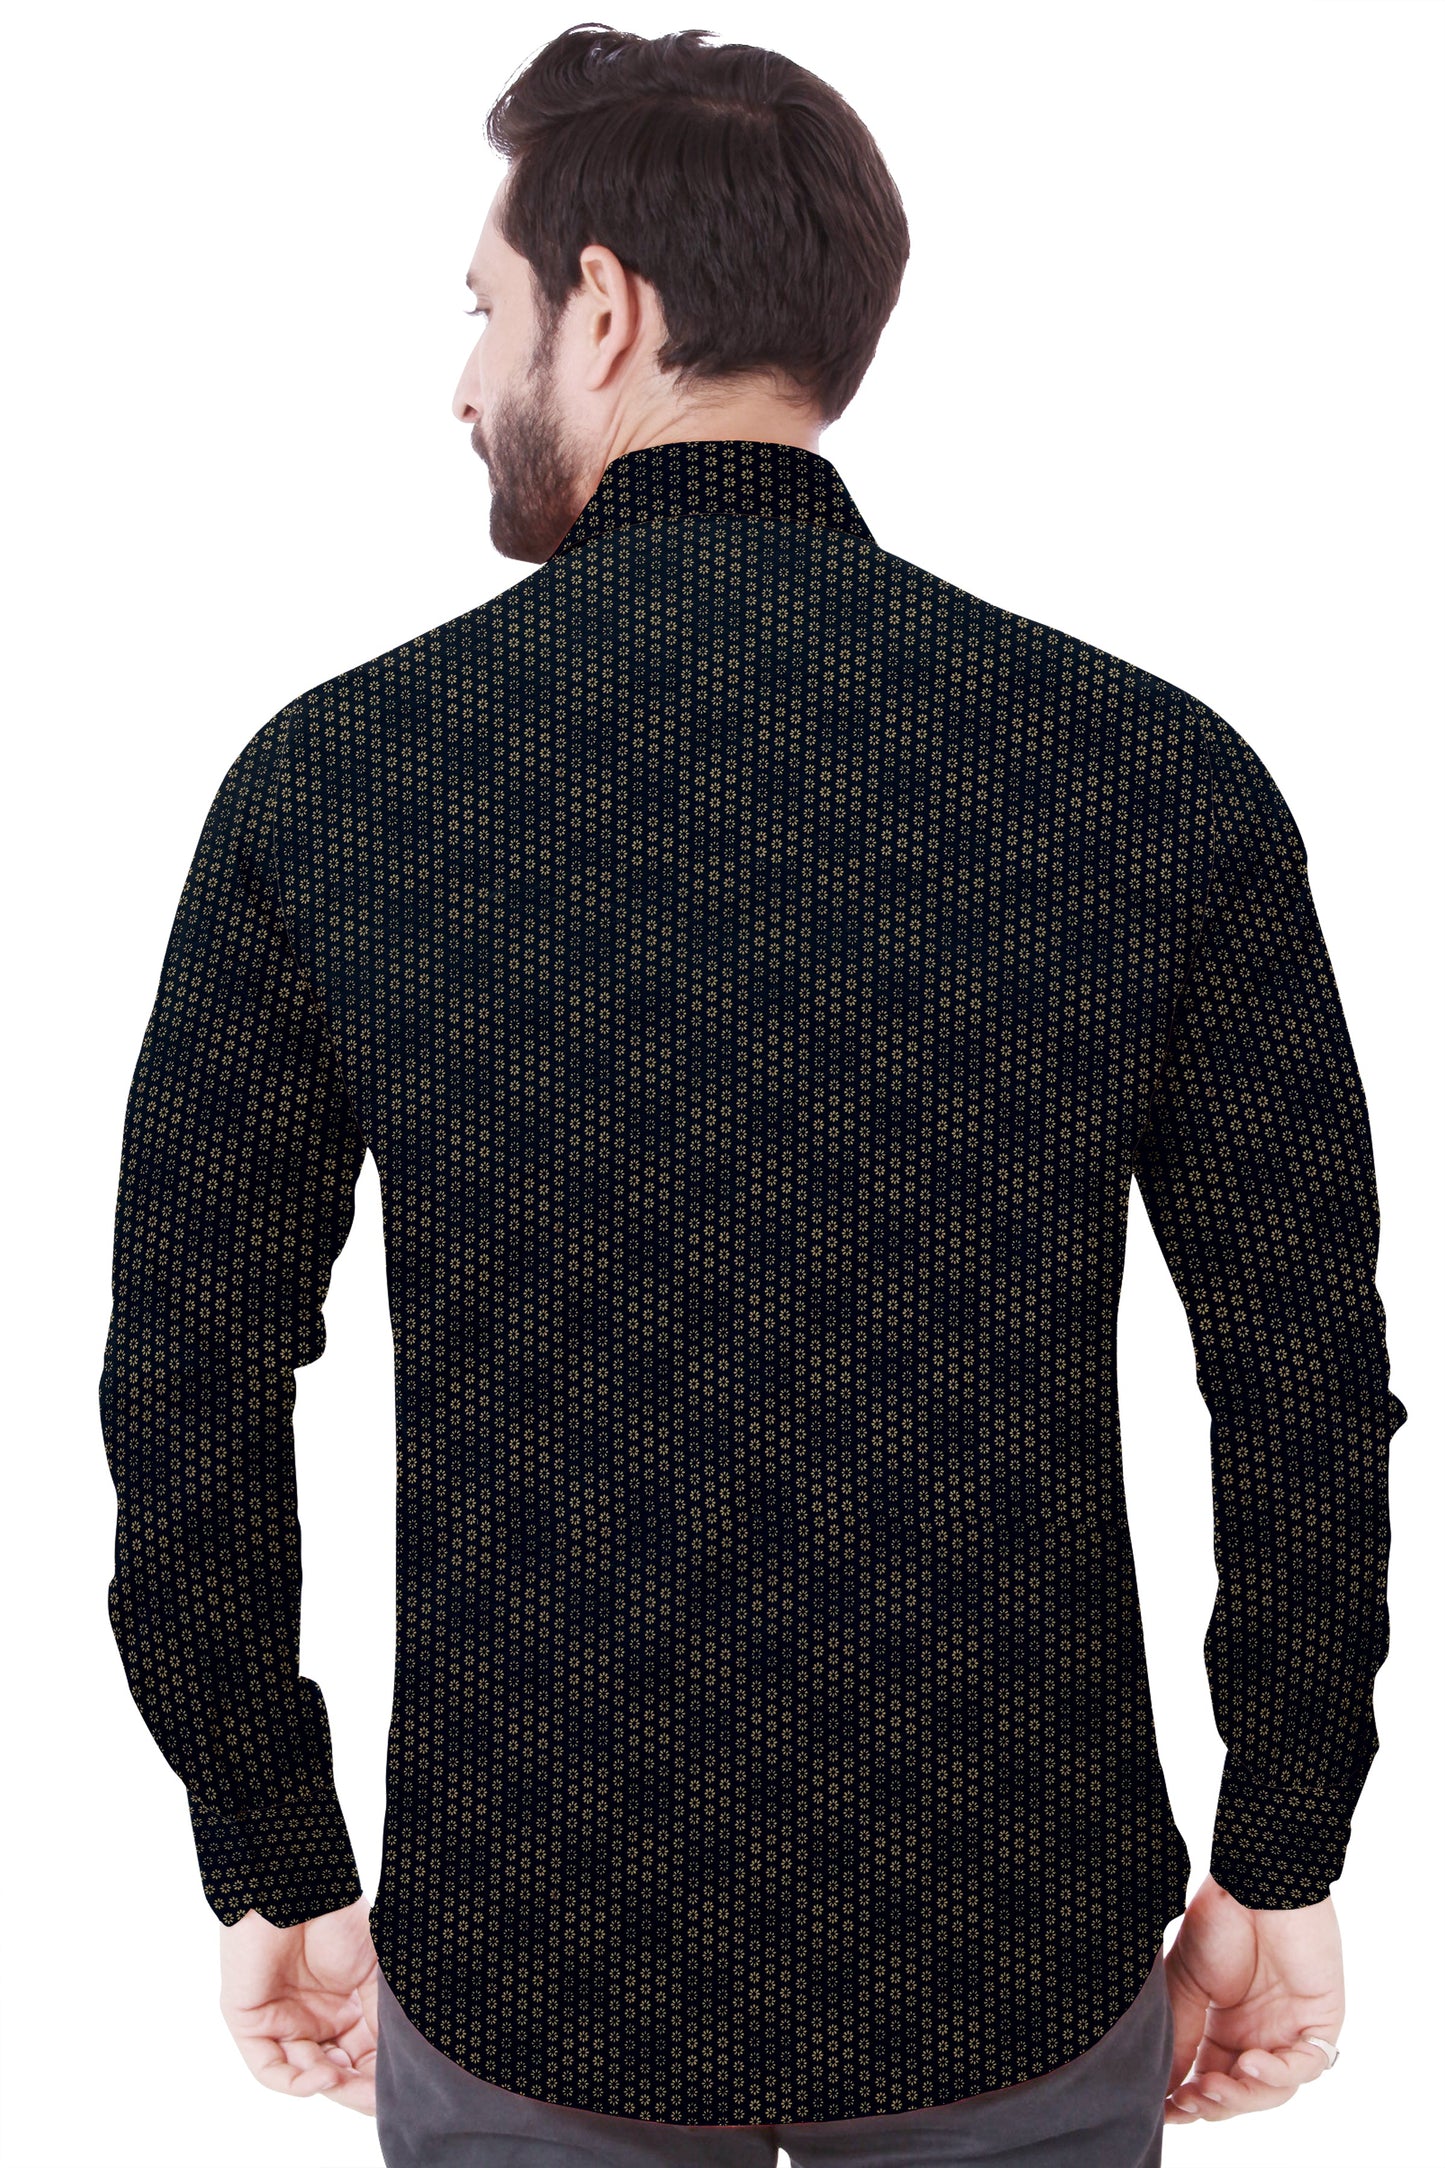 Men's Black Printed Casual Shirt Full Sleeves 100% Cotton - Styleflea